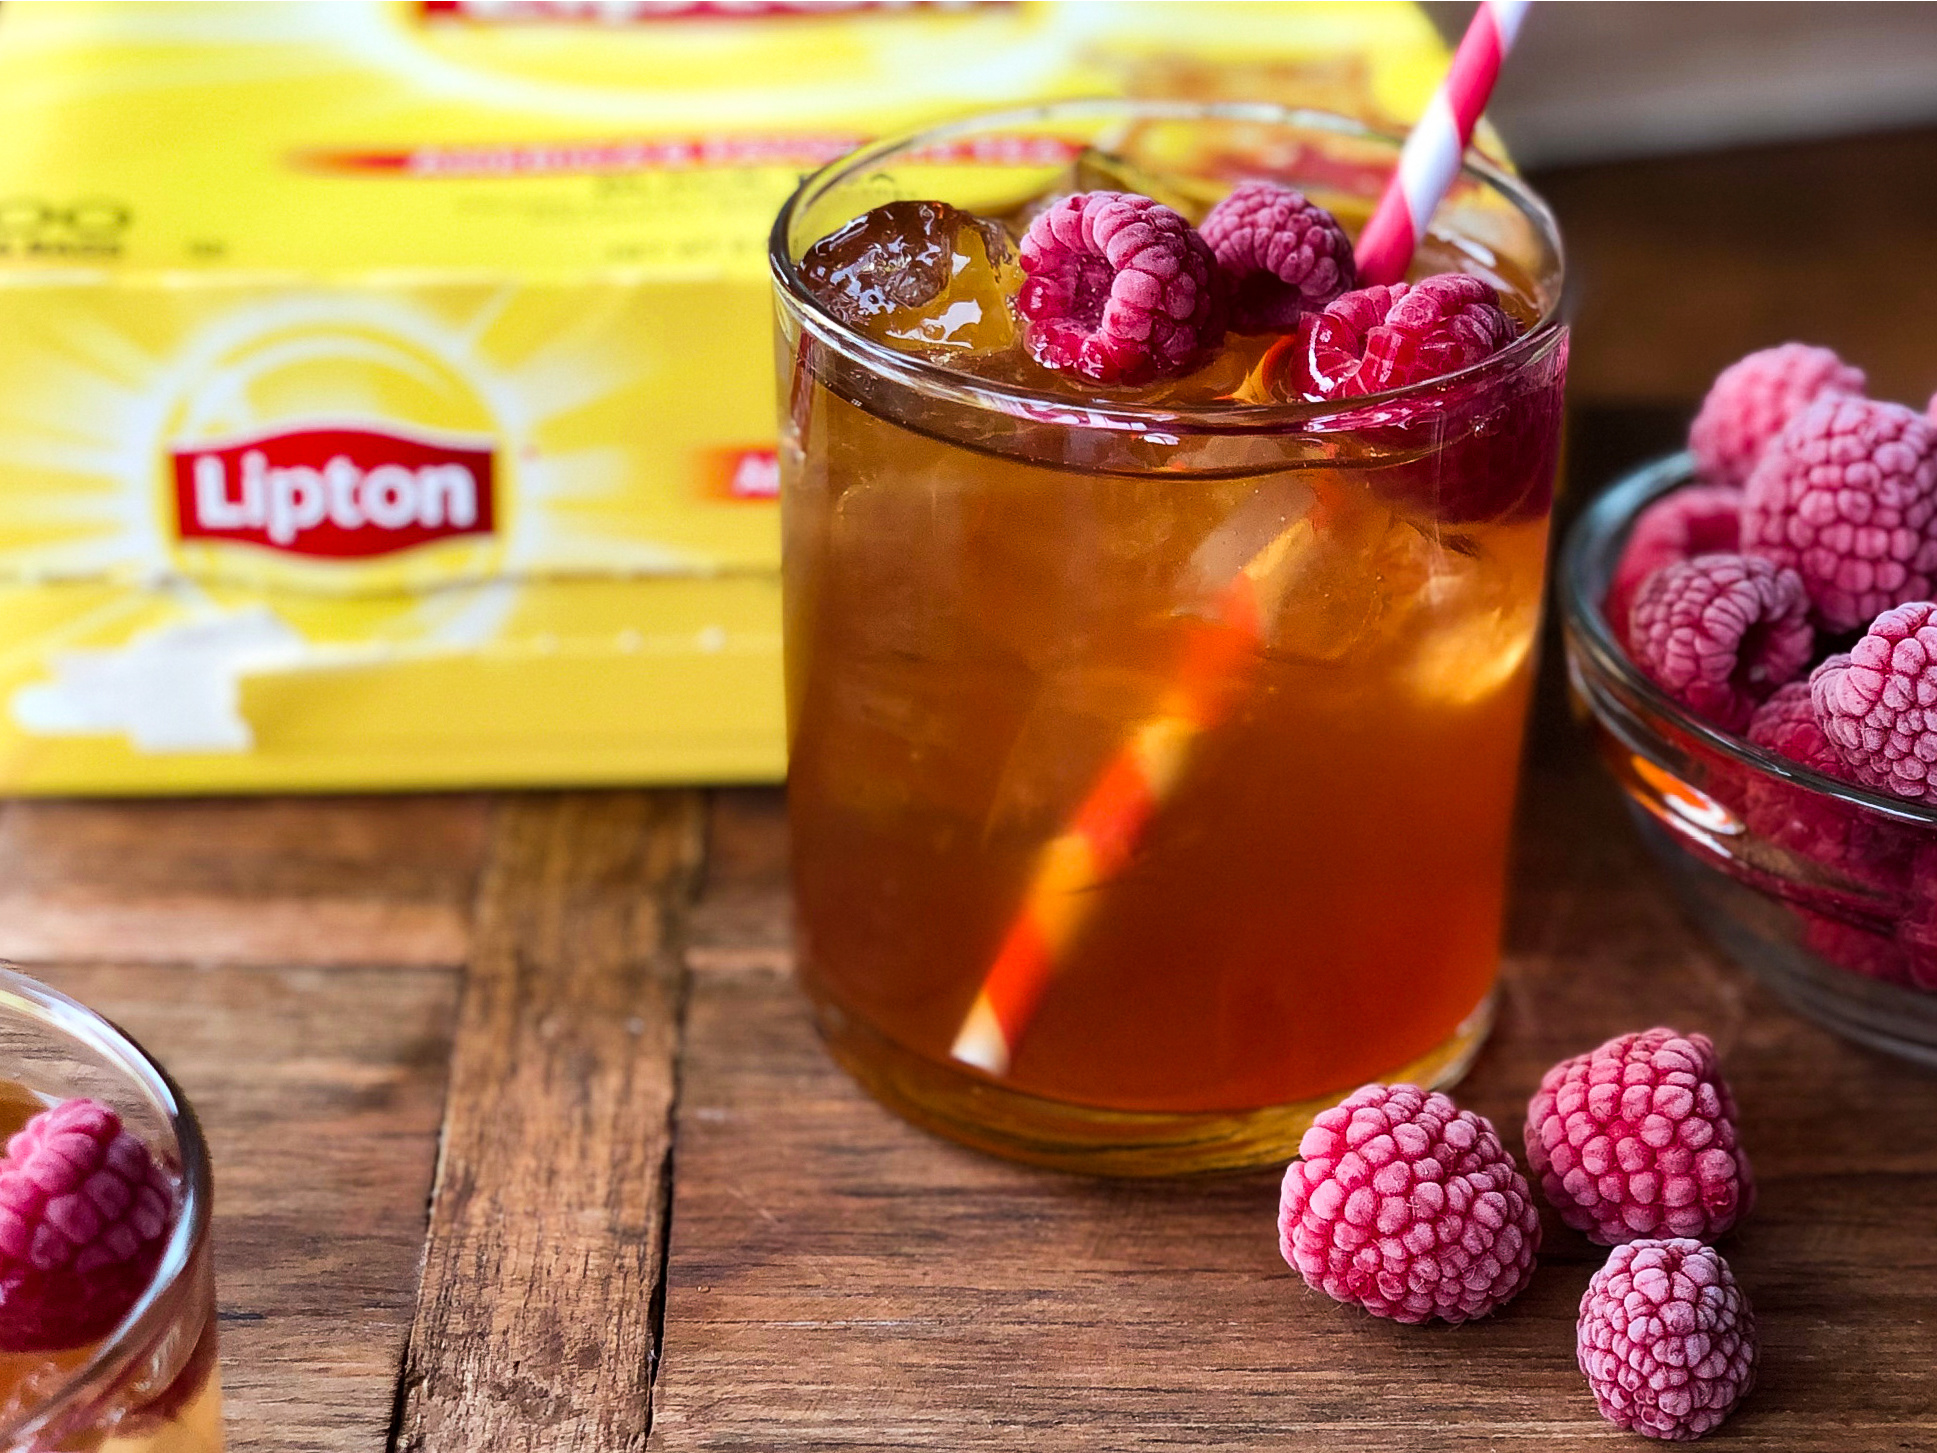 Save On Lipton Tea At Publix & Try My Sparkling Raspberry Tea on I Heart Publix